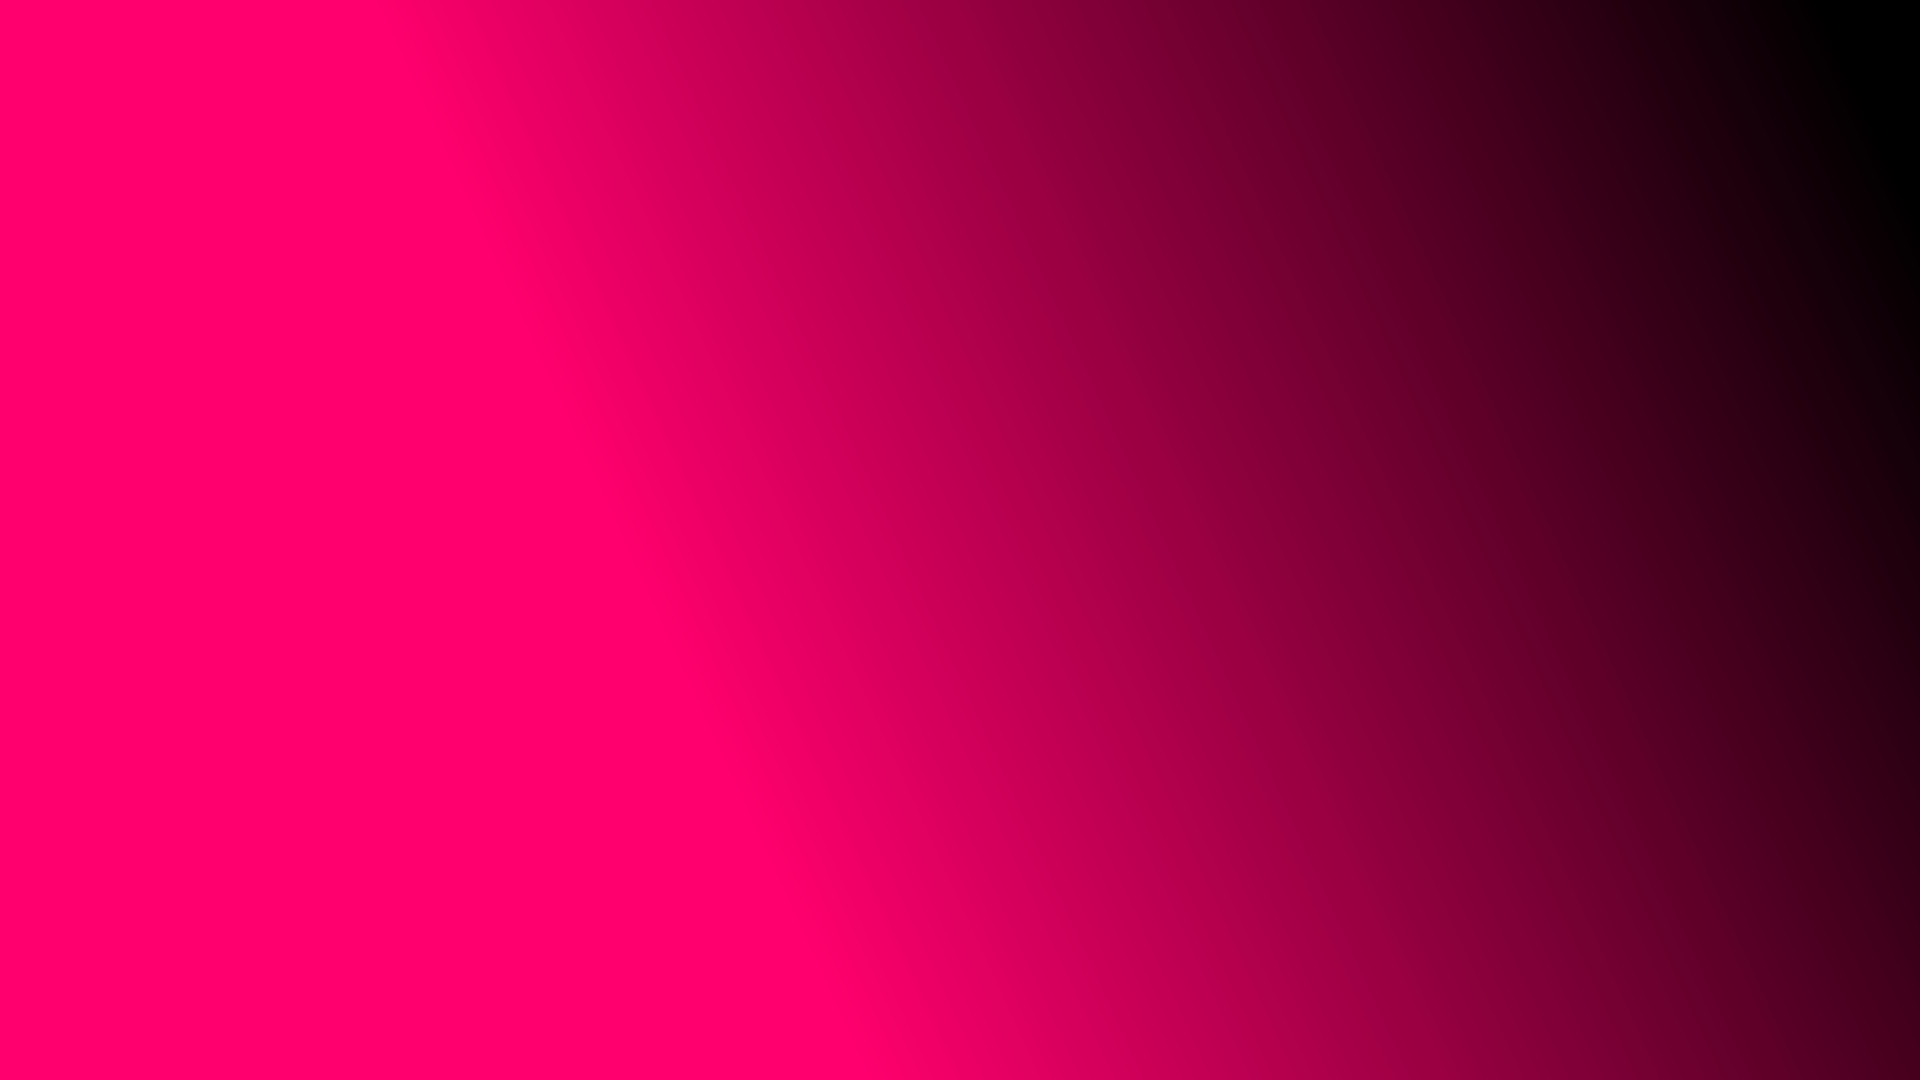  Pink  And Black  Backgrounds  HD PixelsTalk Net